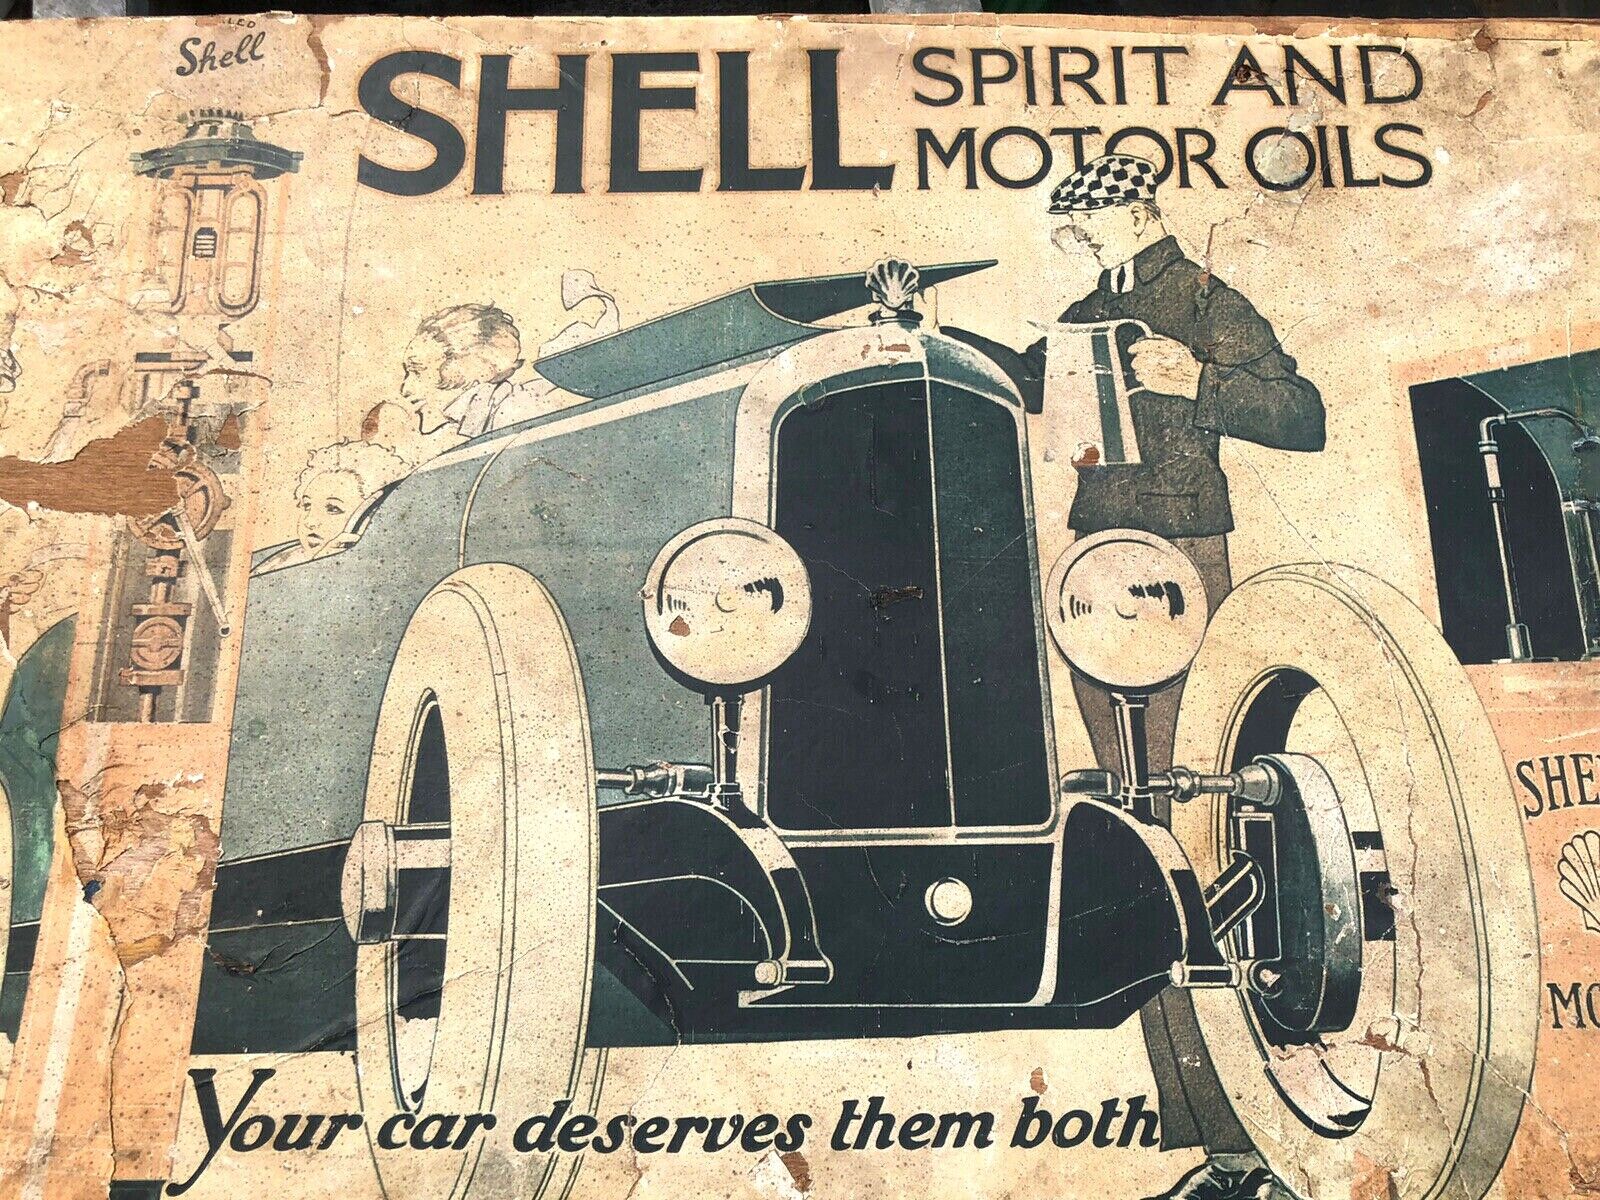 Rare Original 1930's Art Deco Shell Spirit and Motor Oil Poster by René Vincent